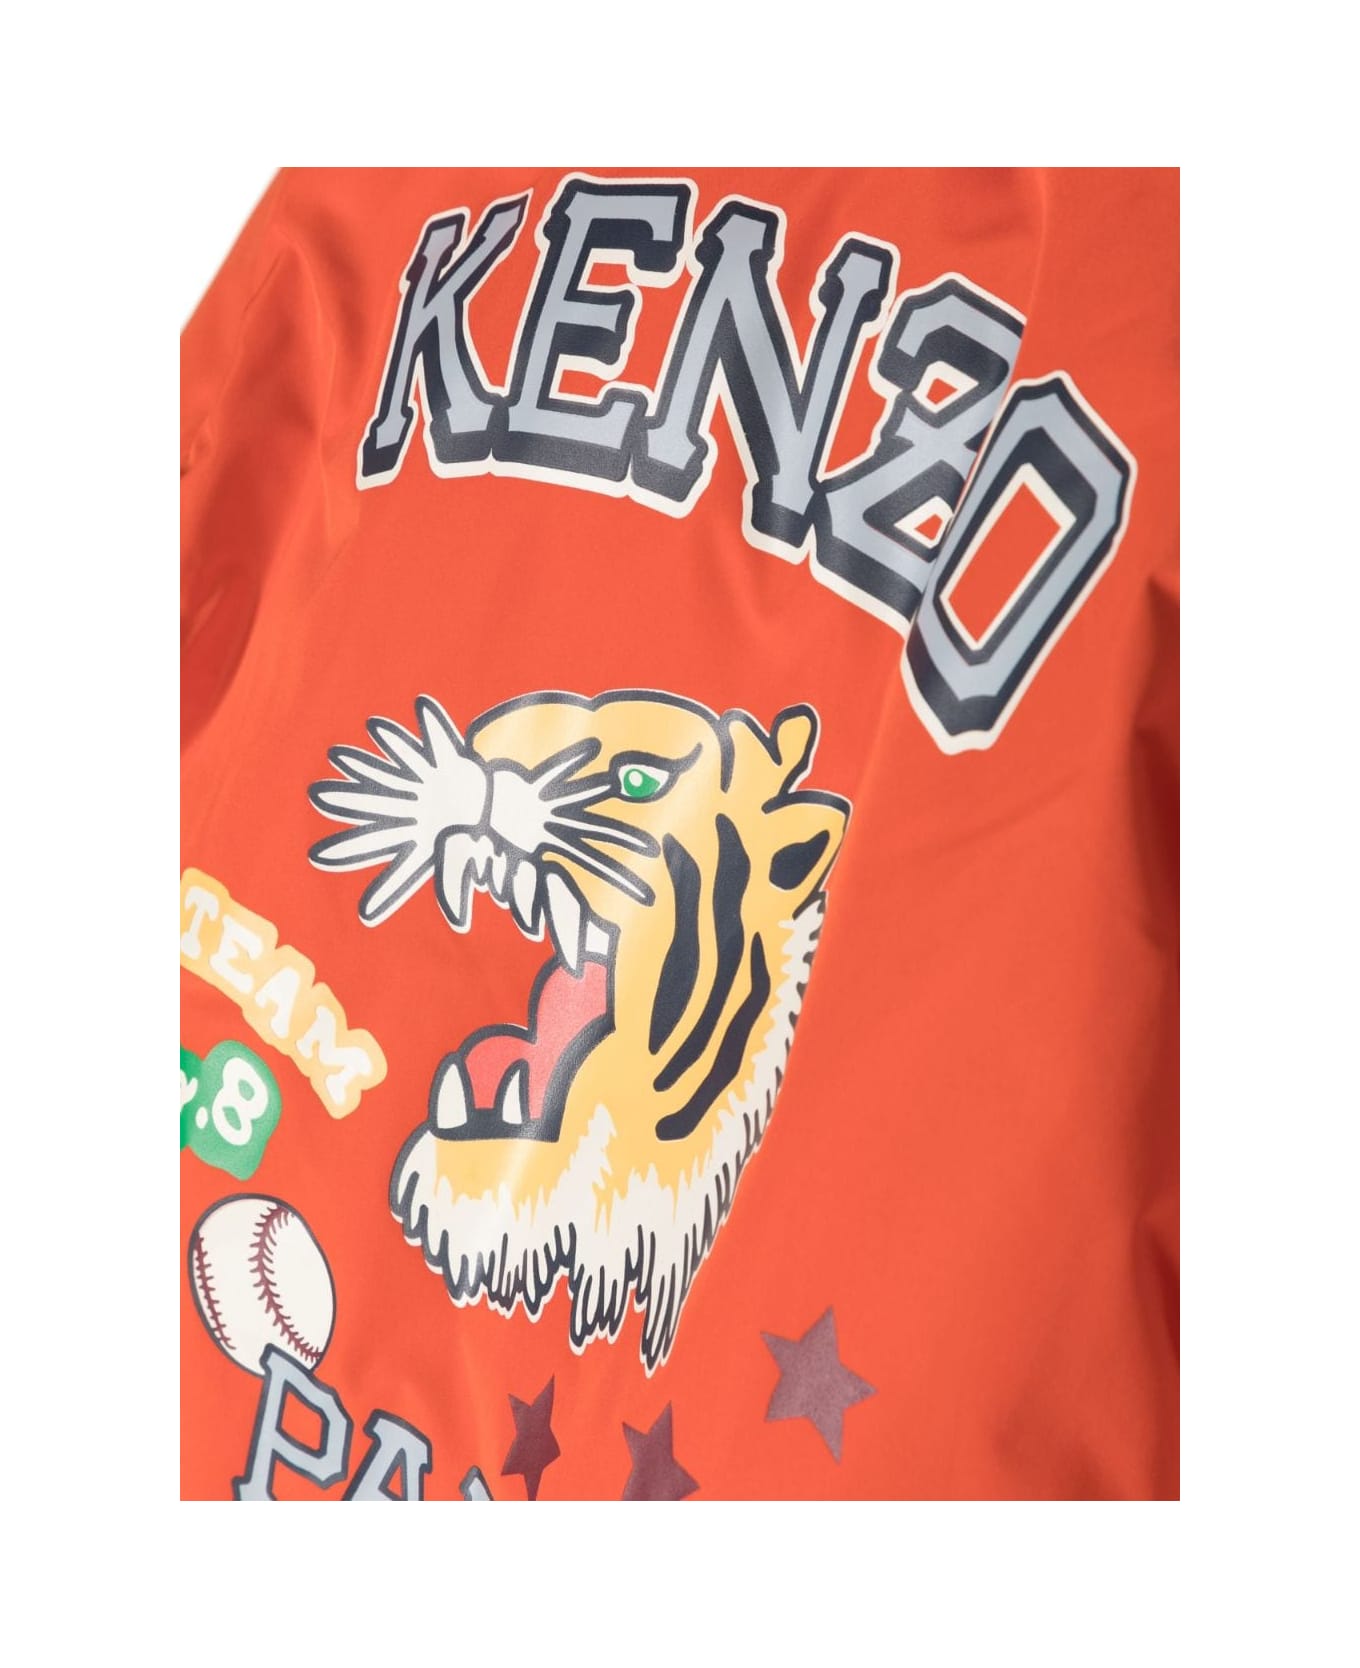 Kenzo Kids Keno Club D2 Puffer Jacket - A Peach